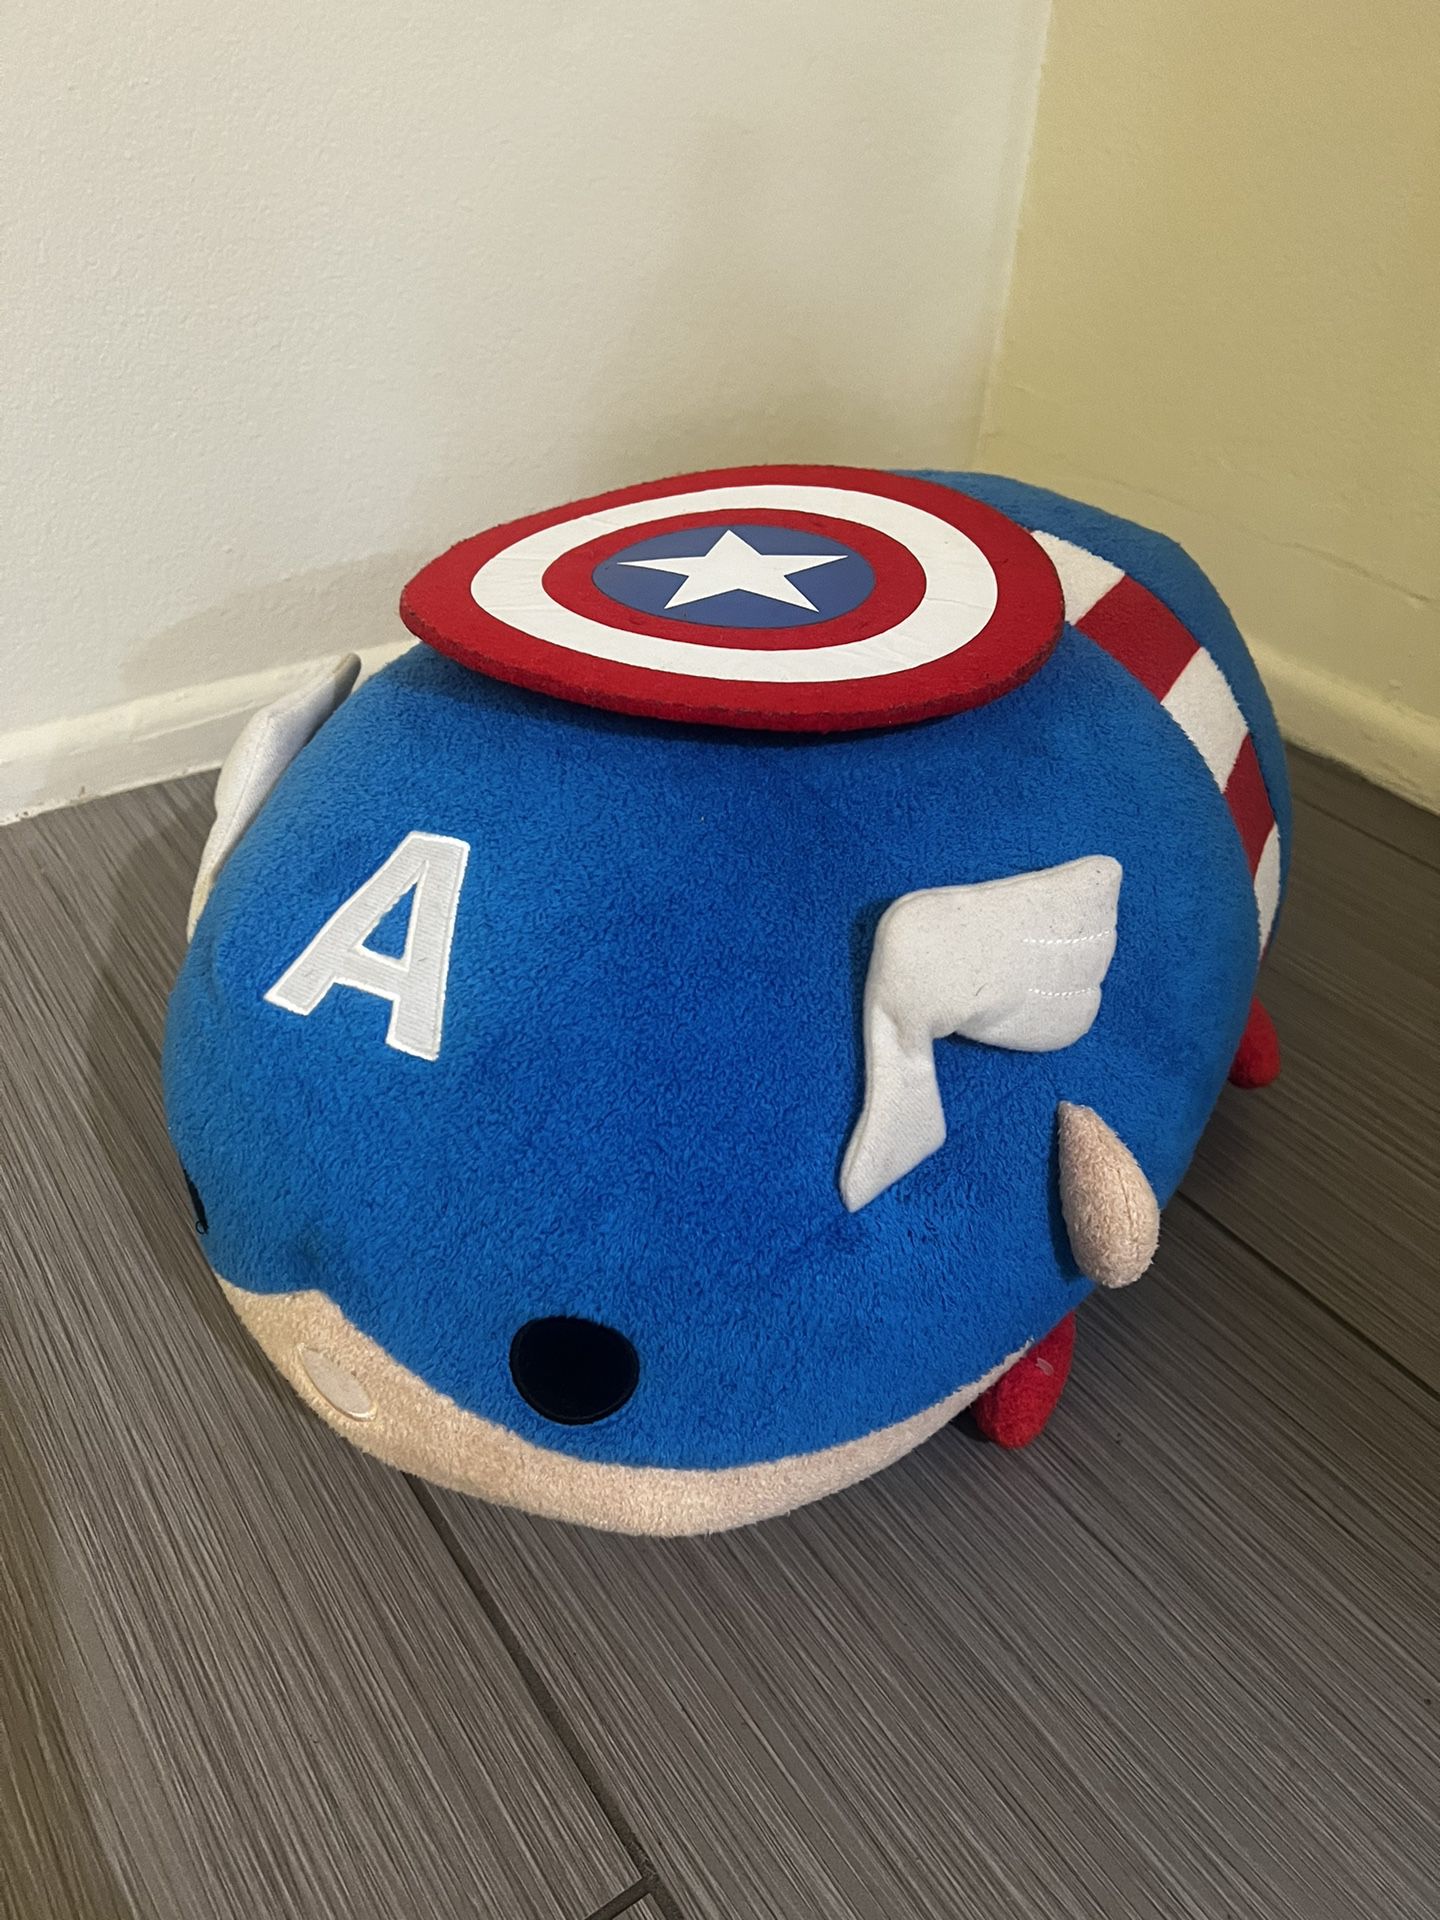 Captain America Tsum Tsum